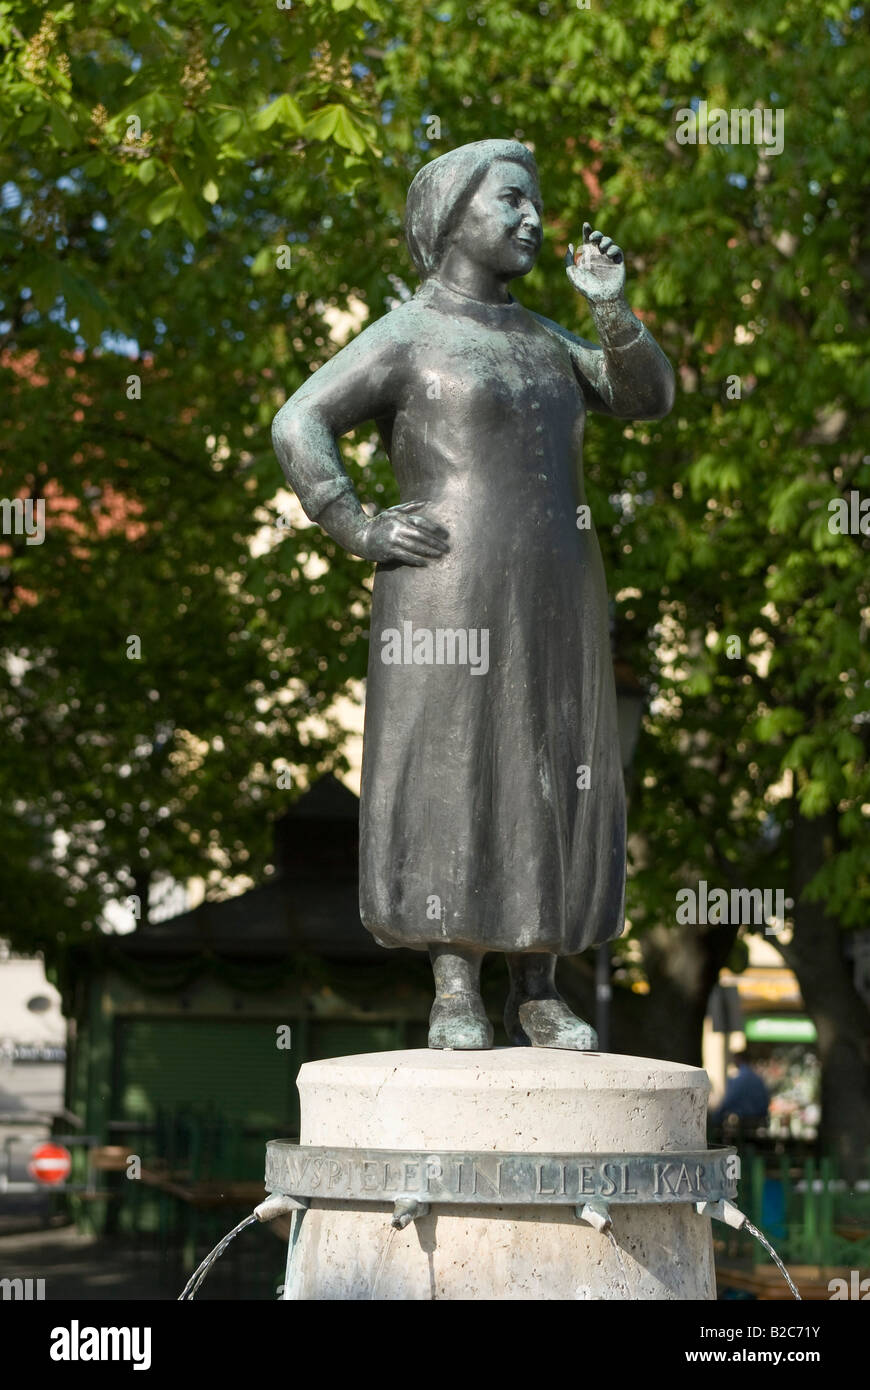 Liesl Karlstadt, attrice, monumento al Viktualienmarkt market square, Monaco di Baviera, Germania, Europa Foto Stock